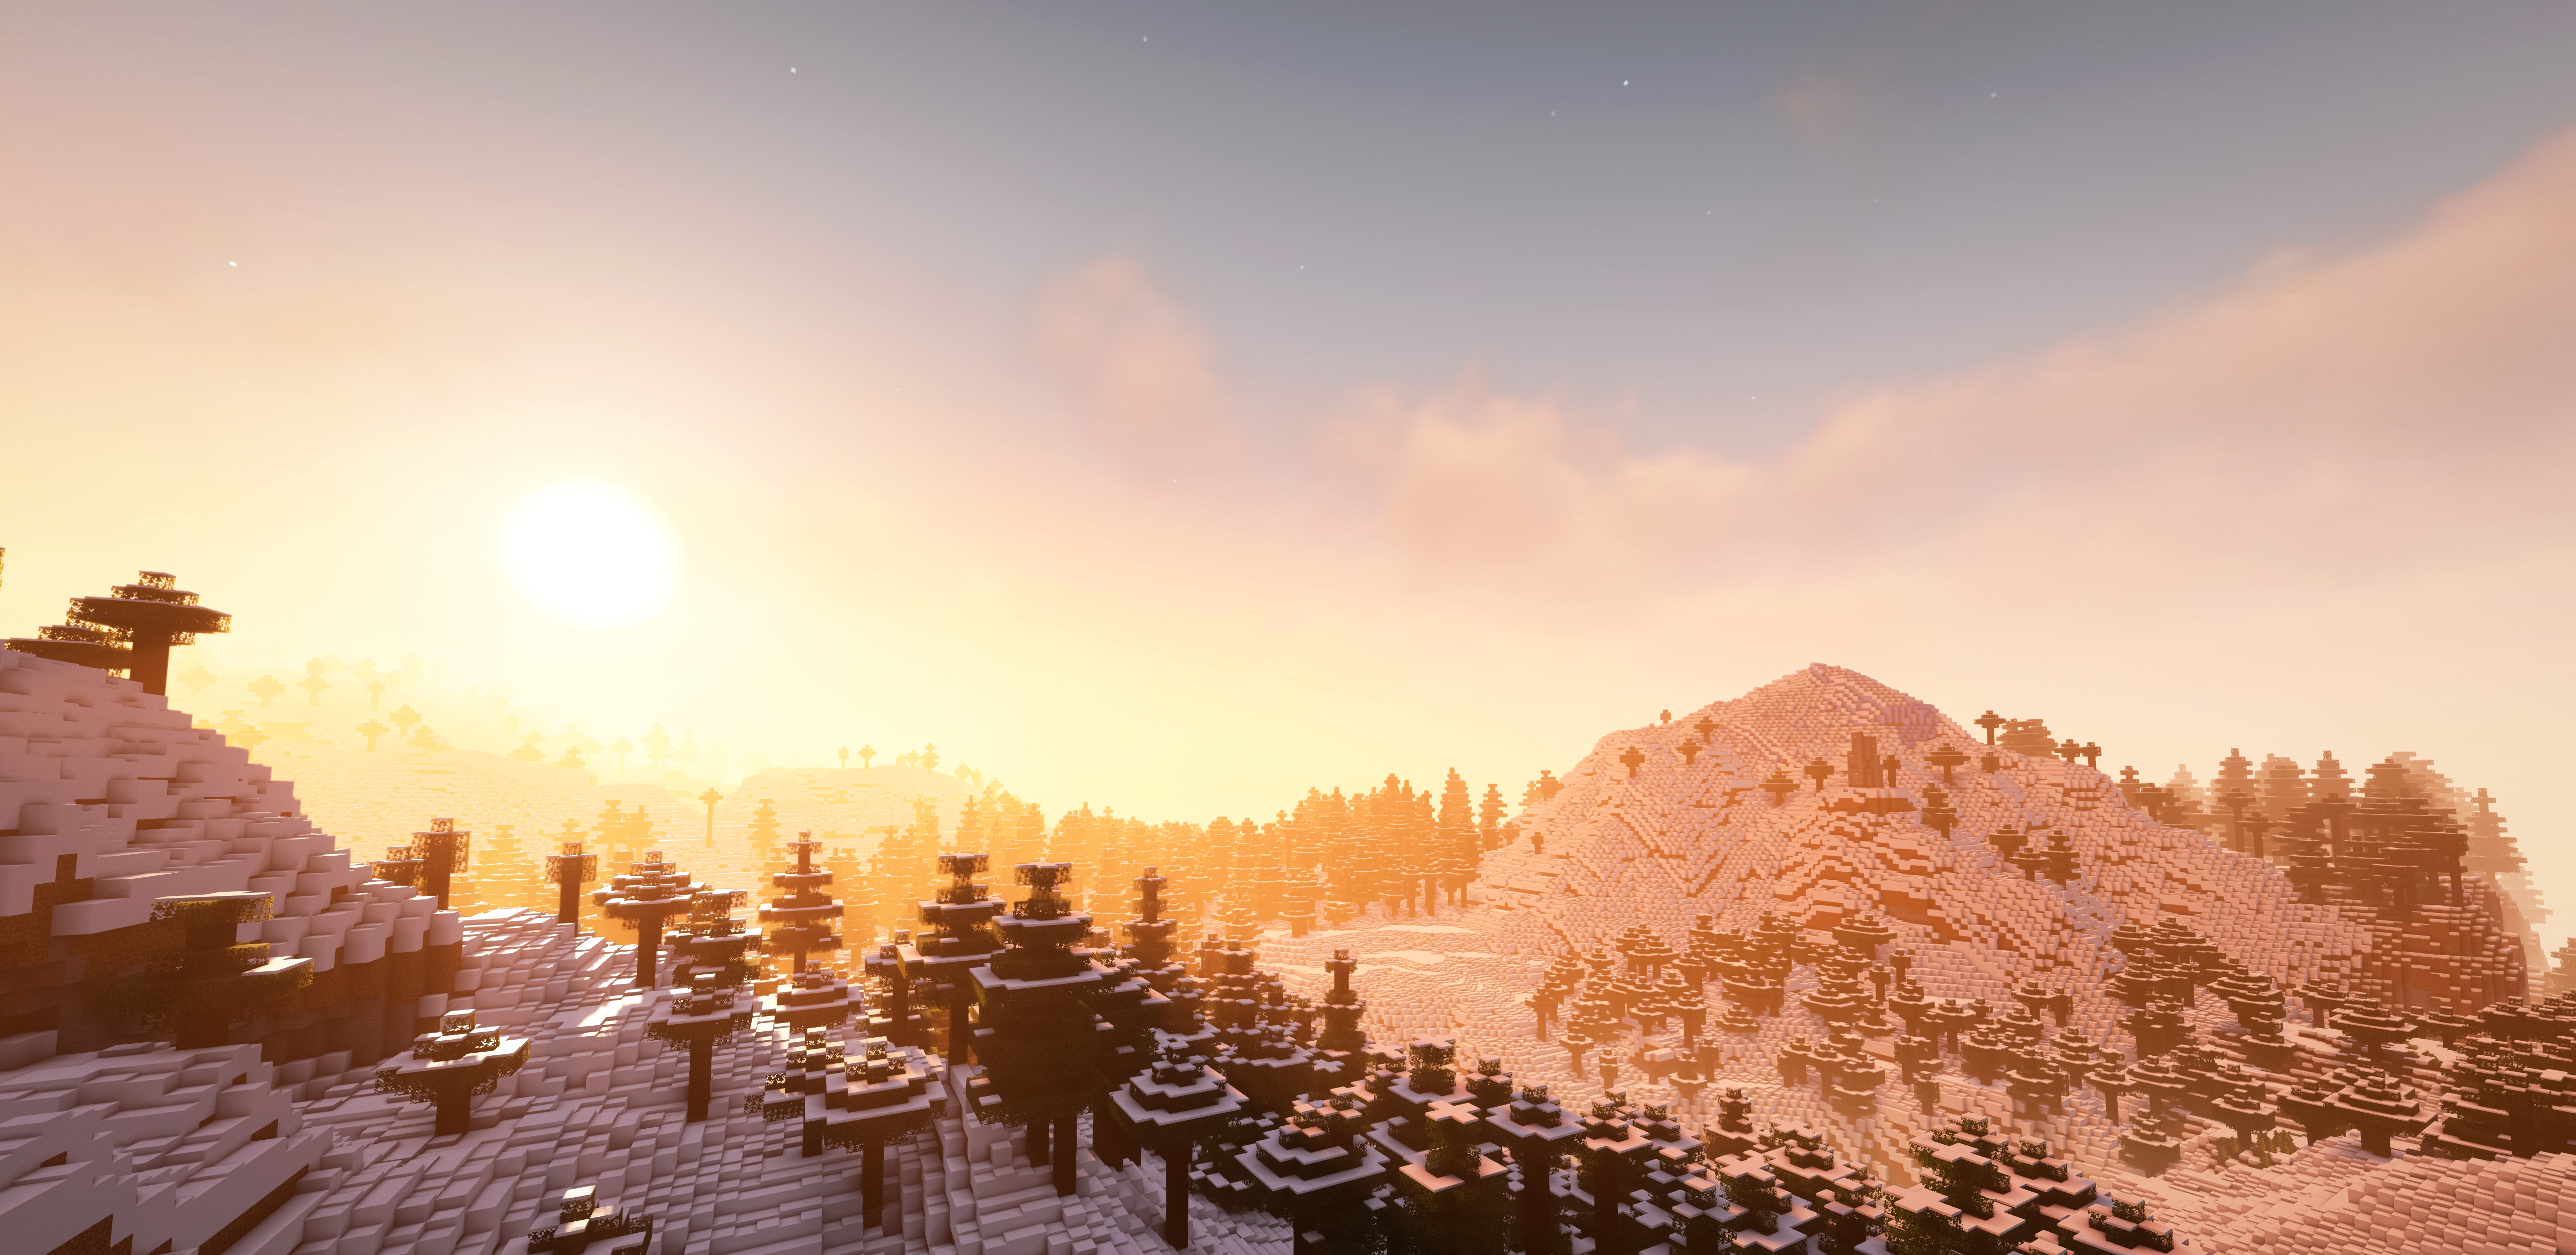 General 5120x2495 landscape Minecraft forest dusk Sun sunset sunset glow sunlight video games CGI cube trees snow video game art sky clouds